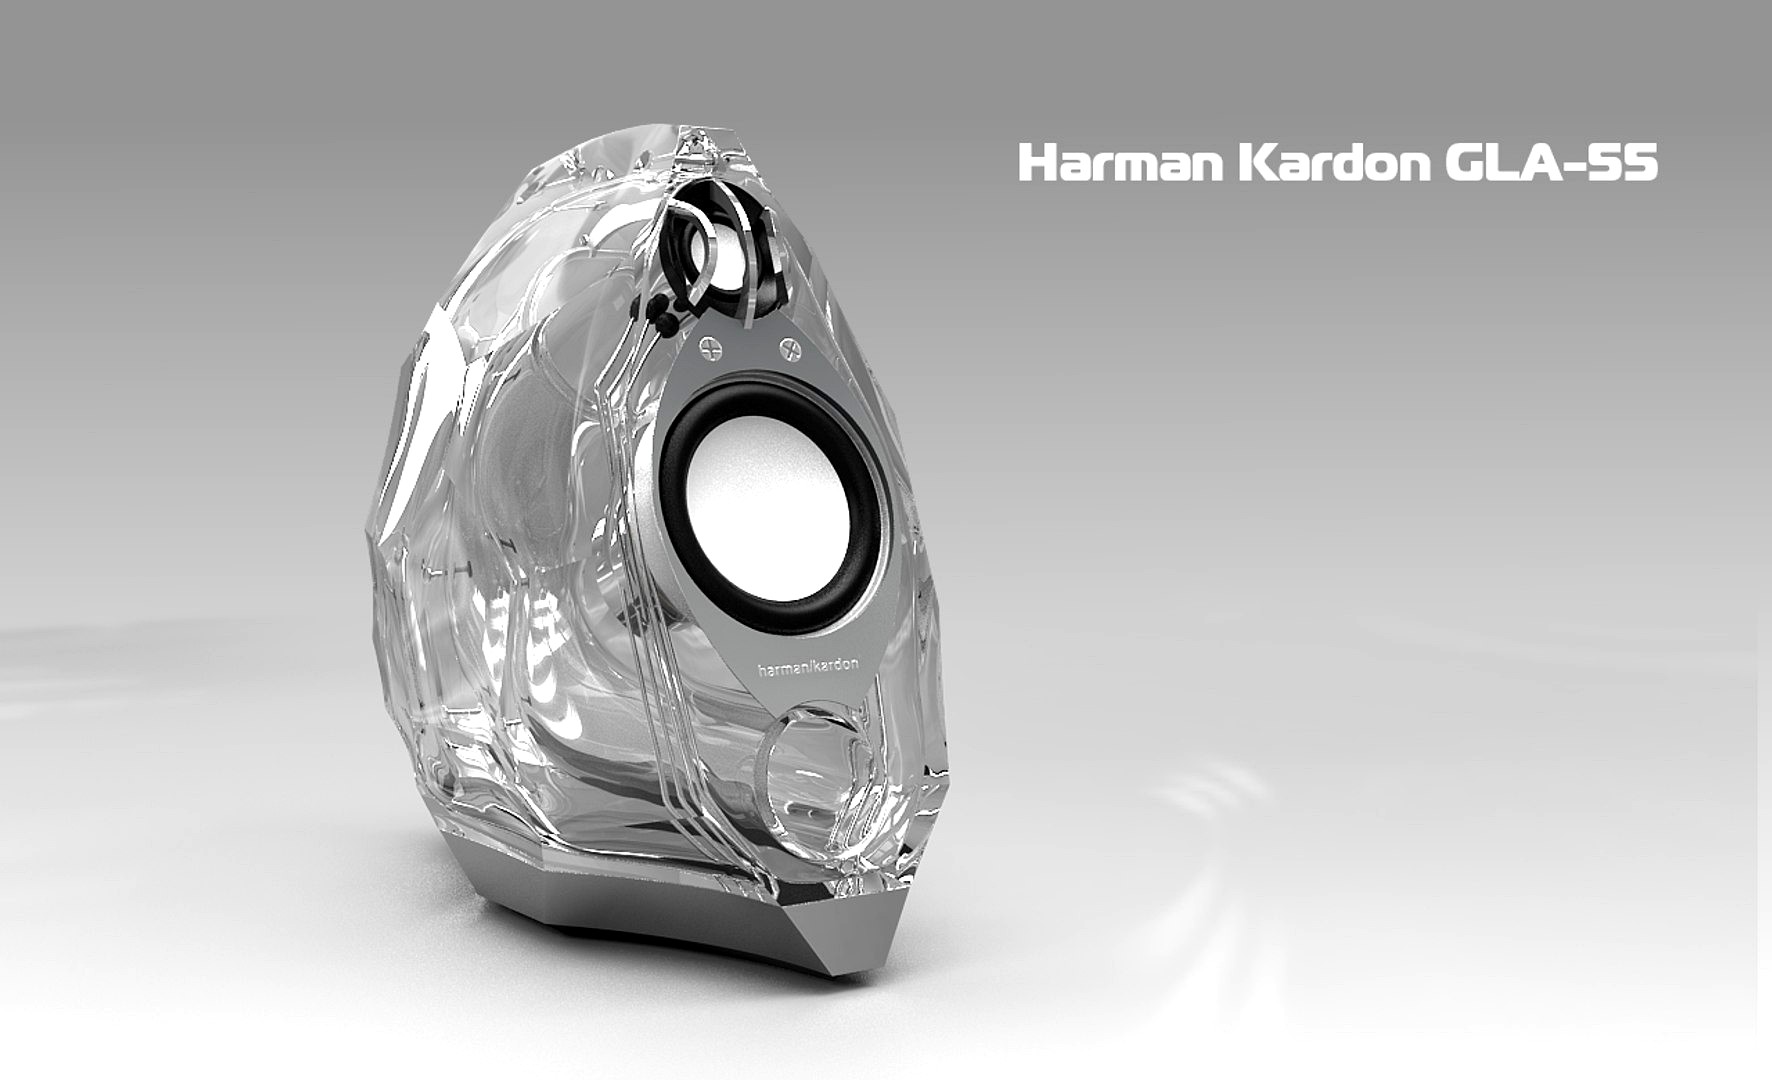 Harman Kardon GLA-55 speakers